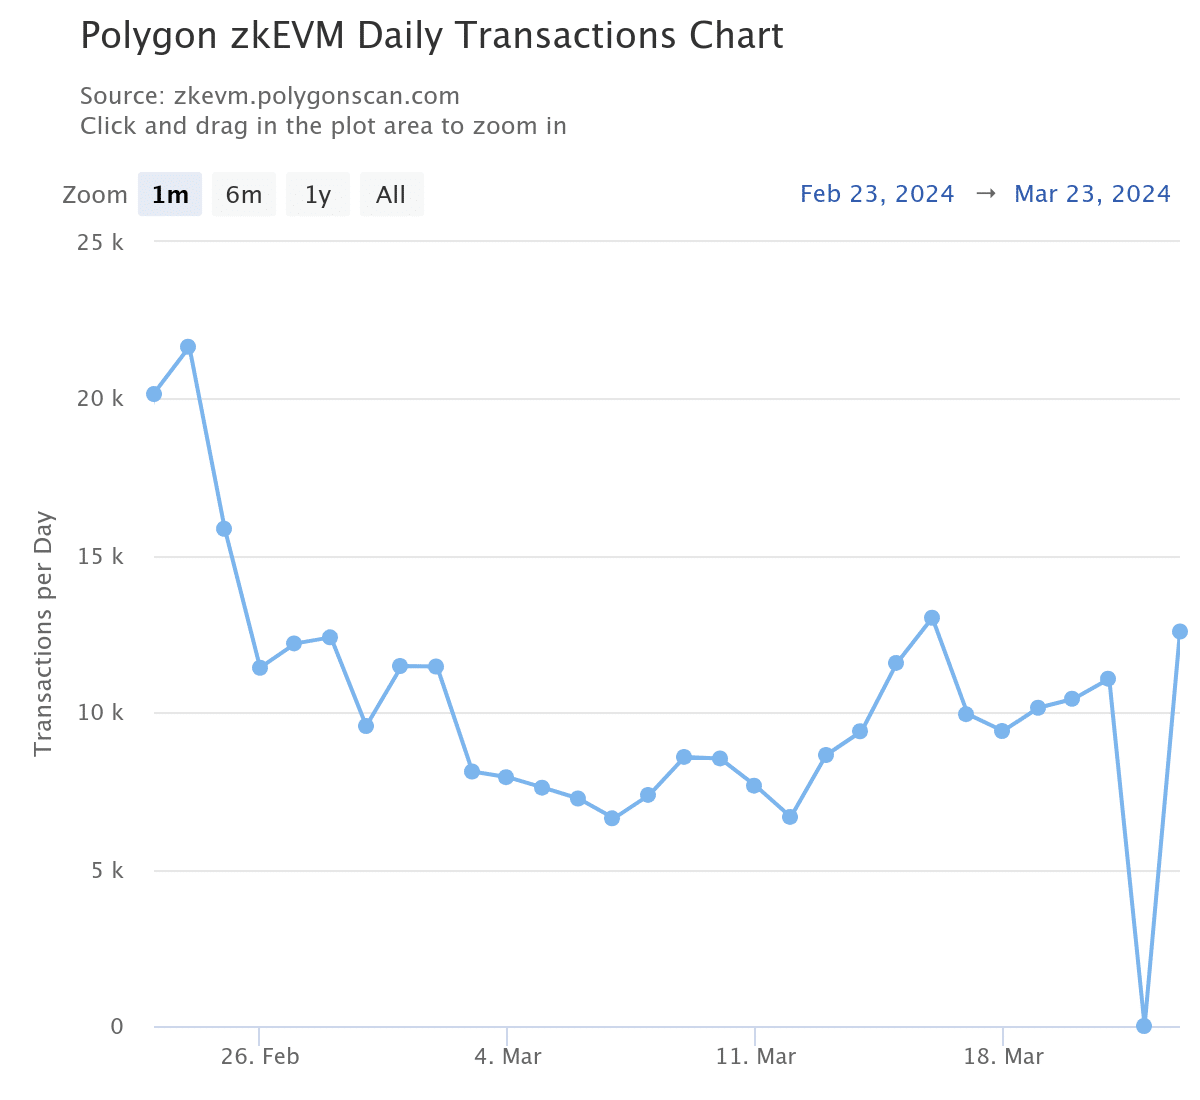 Polygon zkEVM transactions